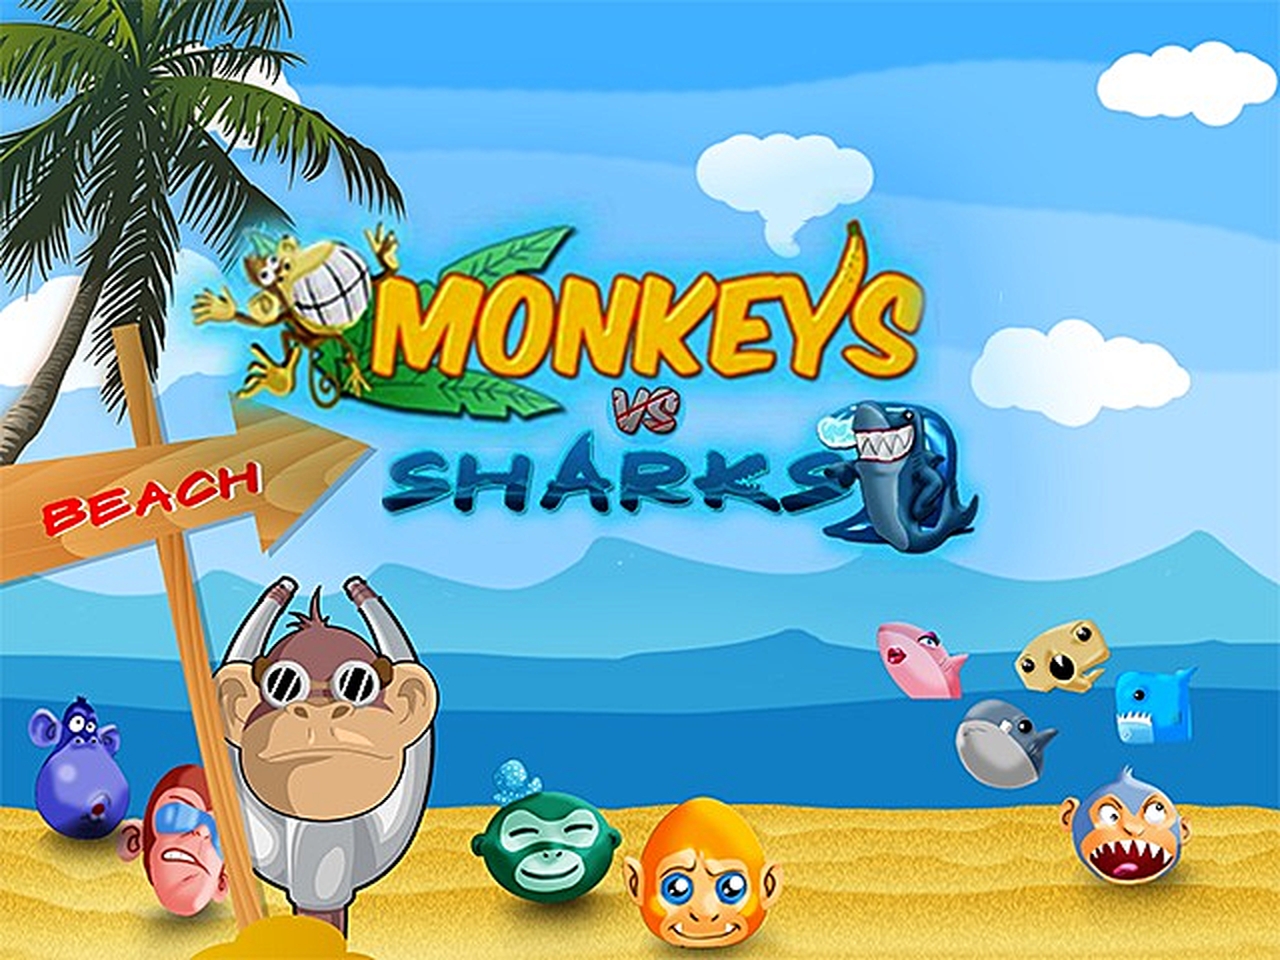 The Monkeys vs Sharks HD Online Slot Demo Game by World Match